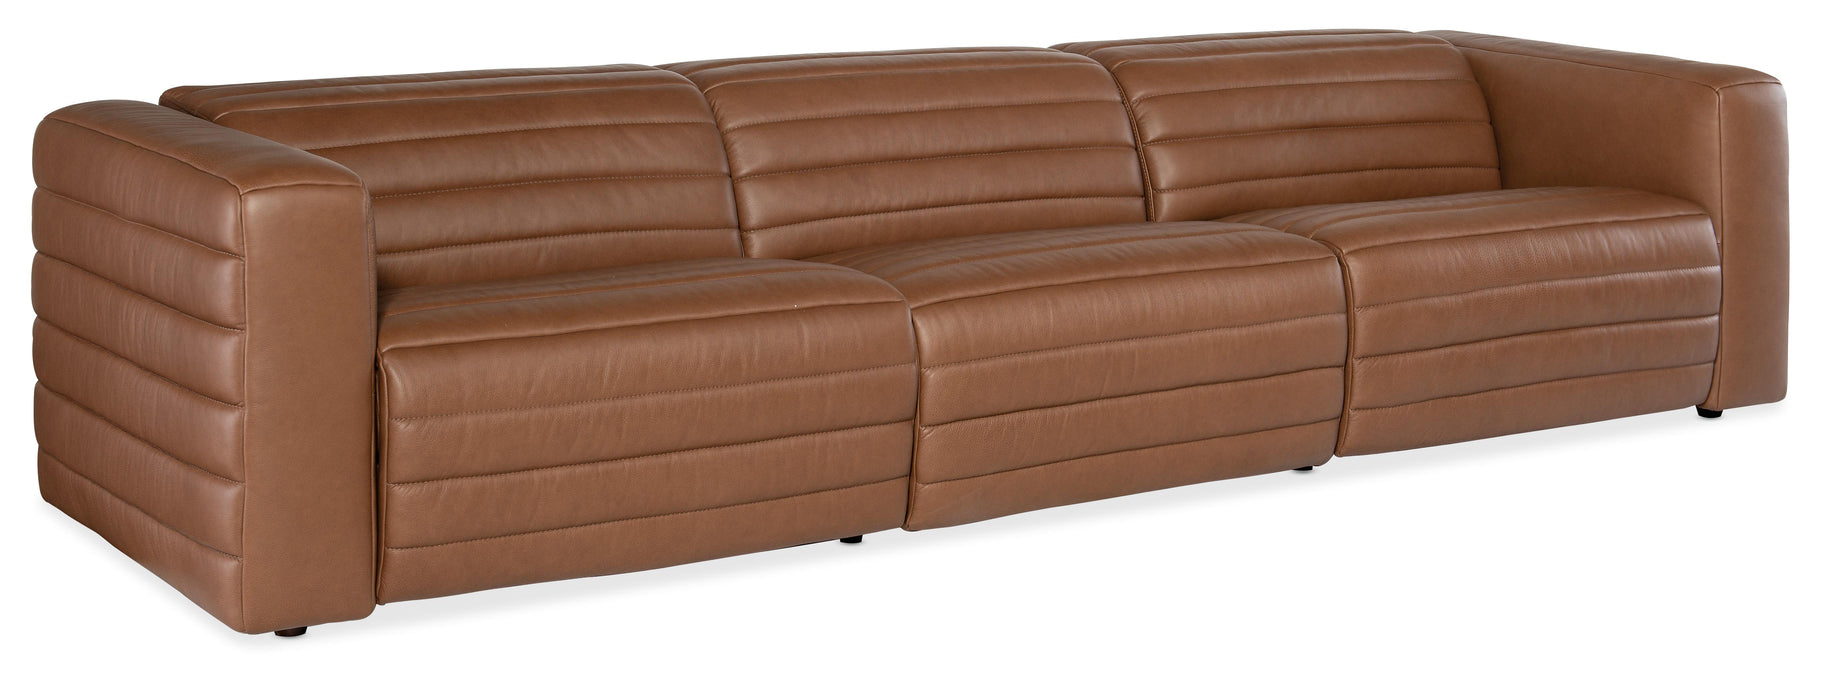 Chatelain 3-Piece Power Sofa with Power Headrest - SS454-GP3-088 image